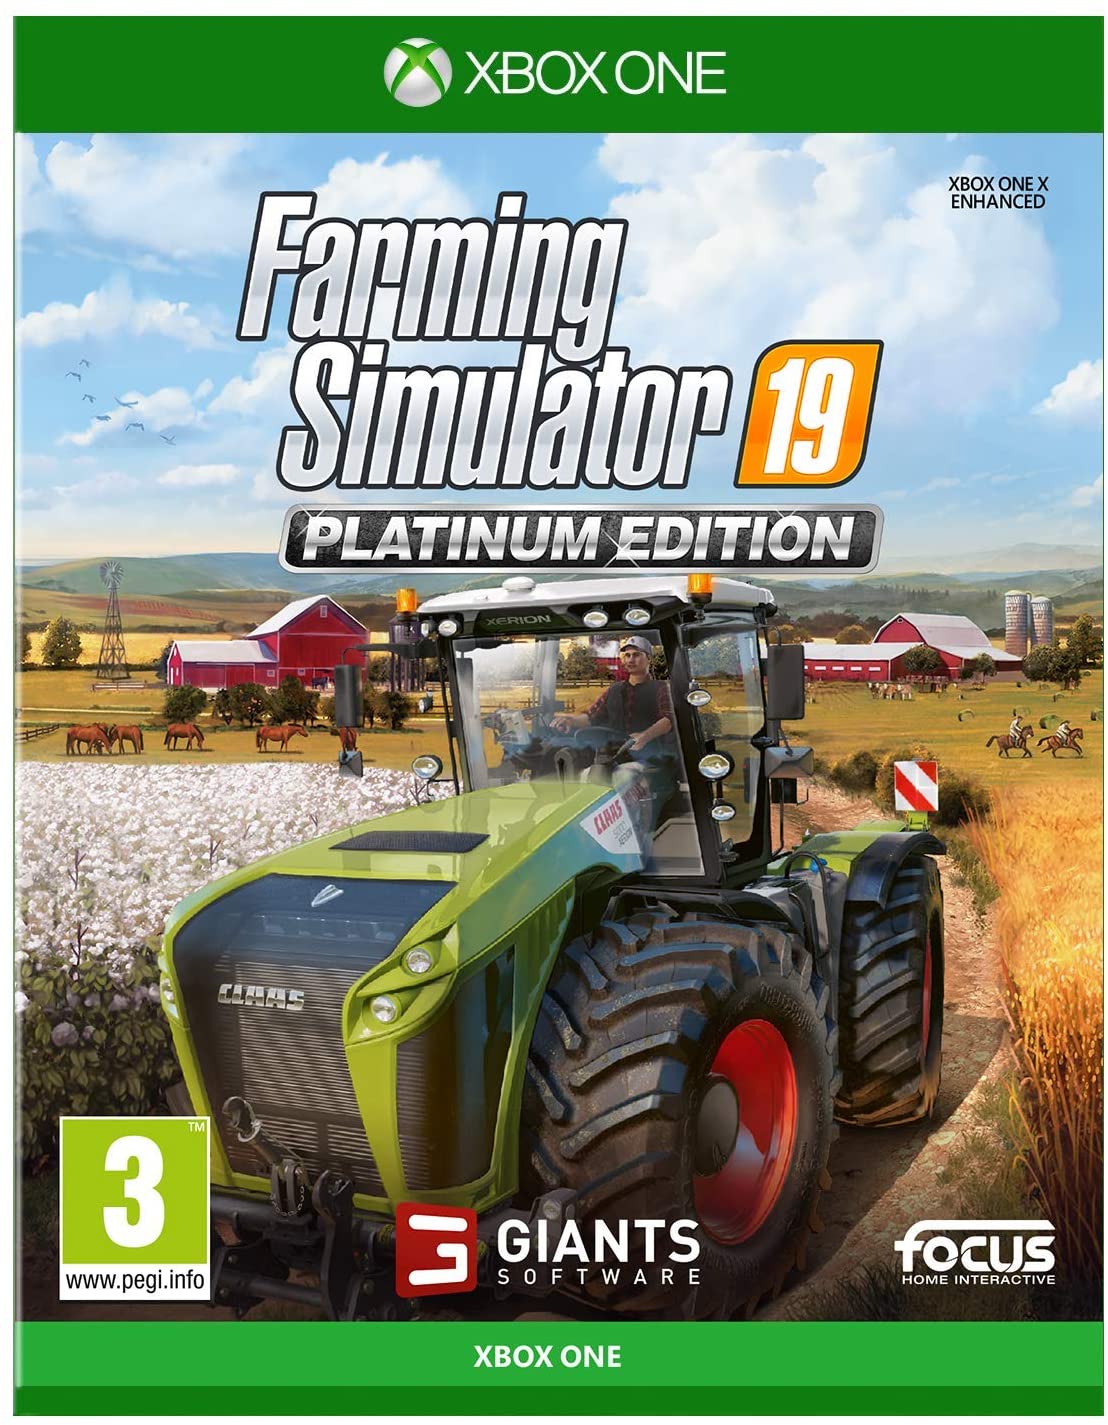 Bondgenoot Uittrekken factor Farming Simulator 19 Platinum Edition CD Key for Xbox One / Series X  (Digital Download)